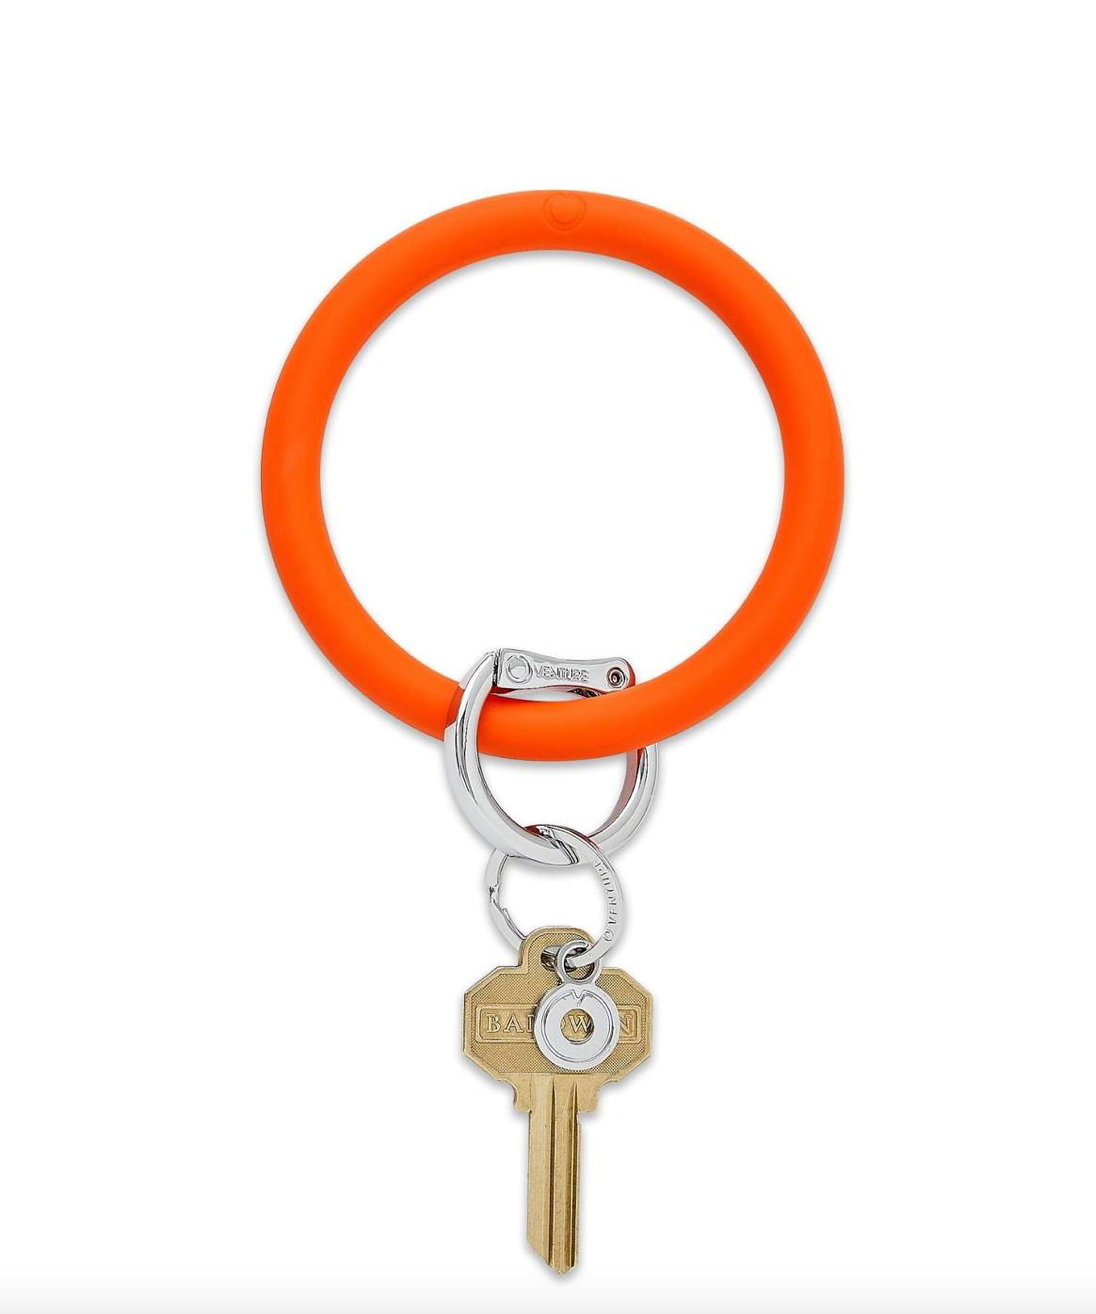 Oventure Key Ring